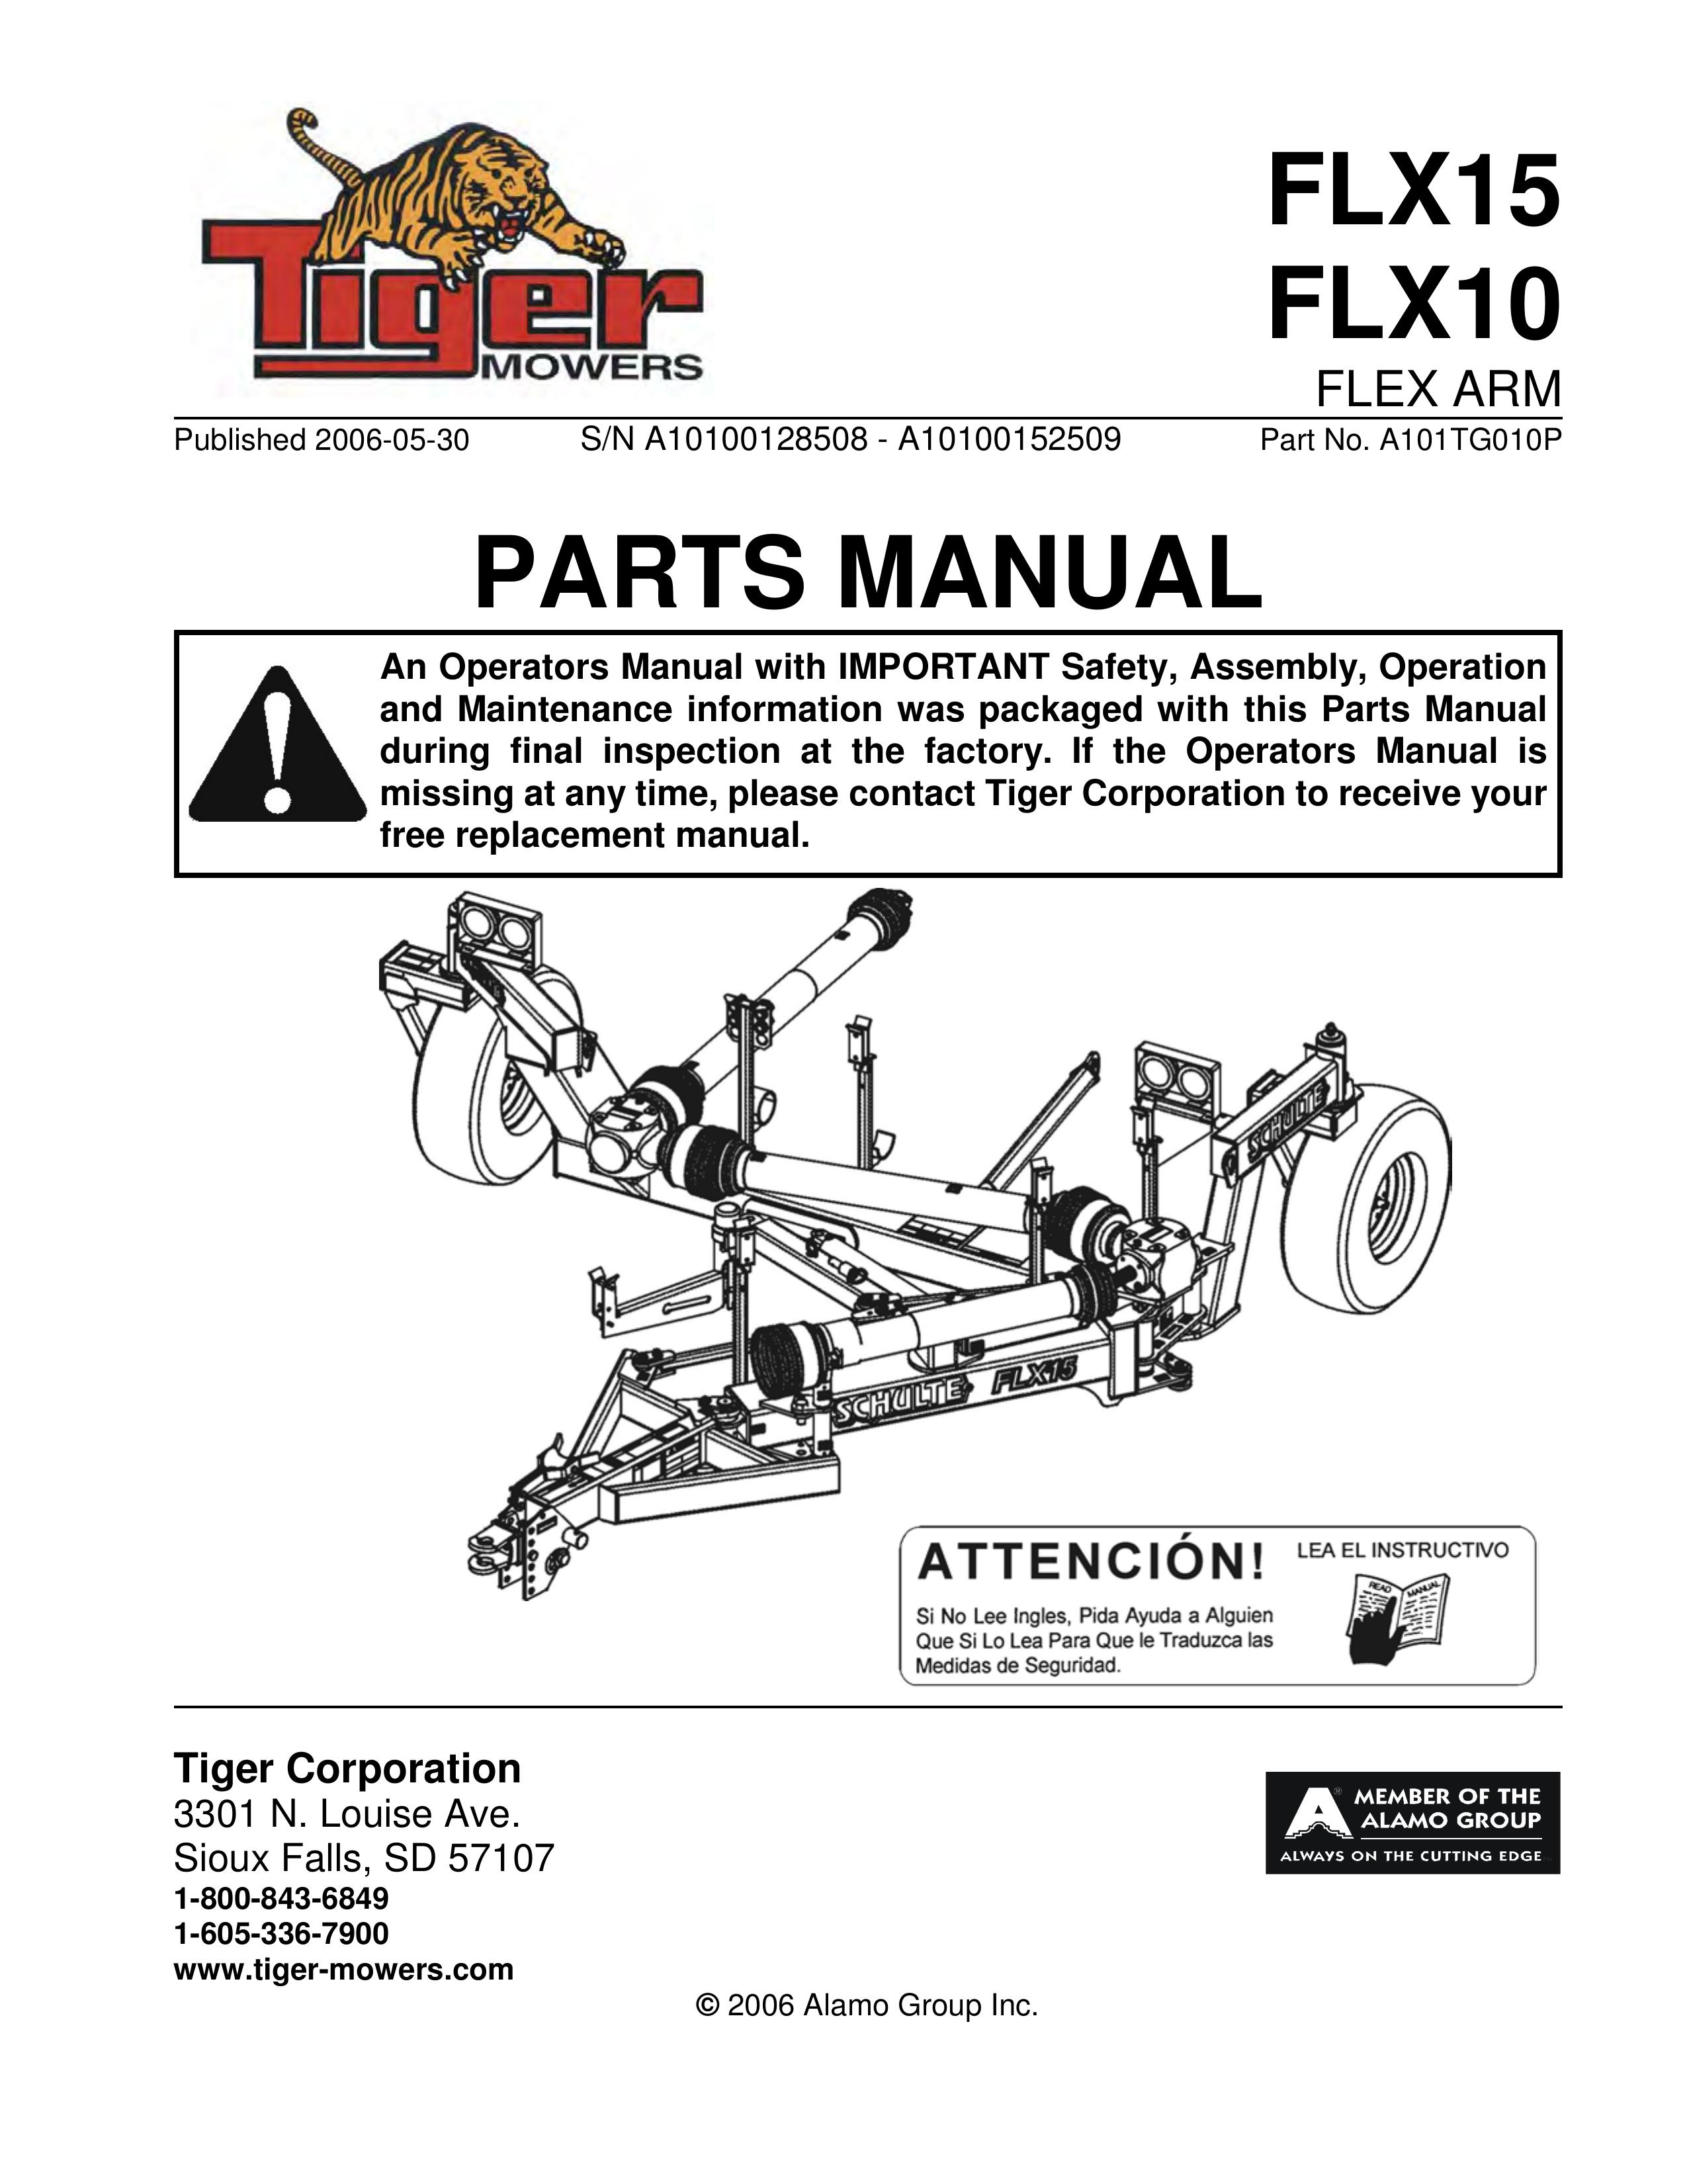 Tiger Mowers FLX10 Lawn Mower User Manual